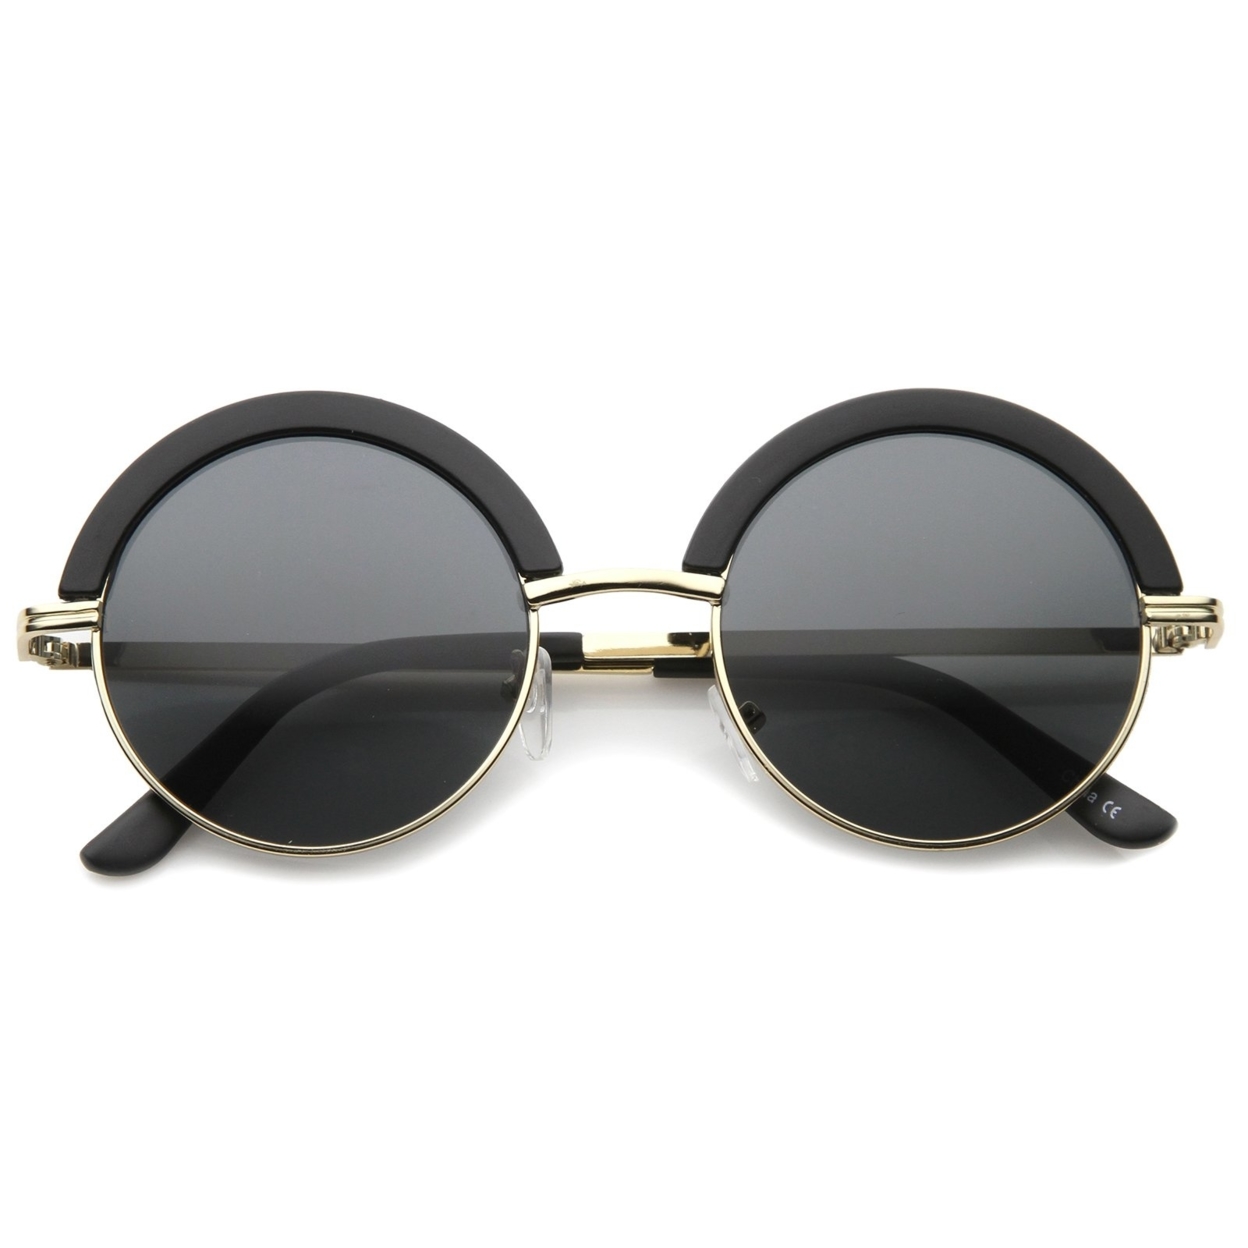 Mod Fashion Oversize Half-Frame Brow Eyelid Round Sunglasses 50mm - Matte Black-Gold / Smoke